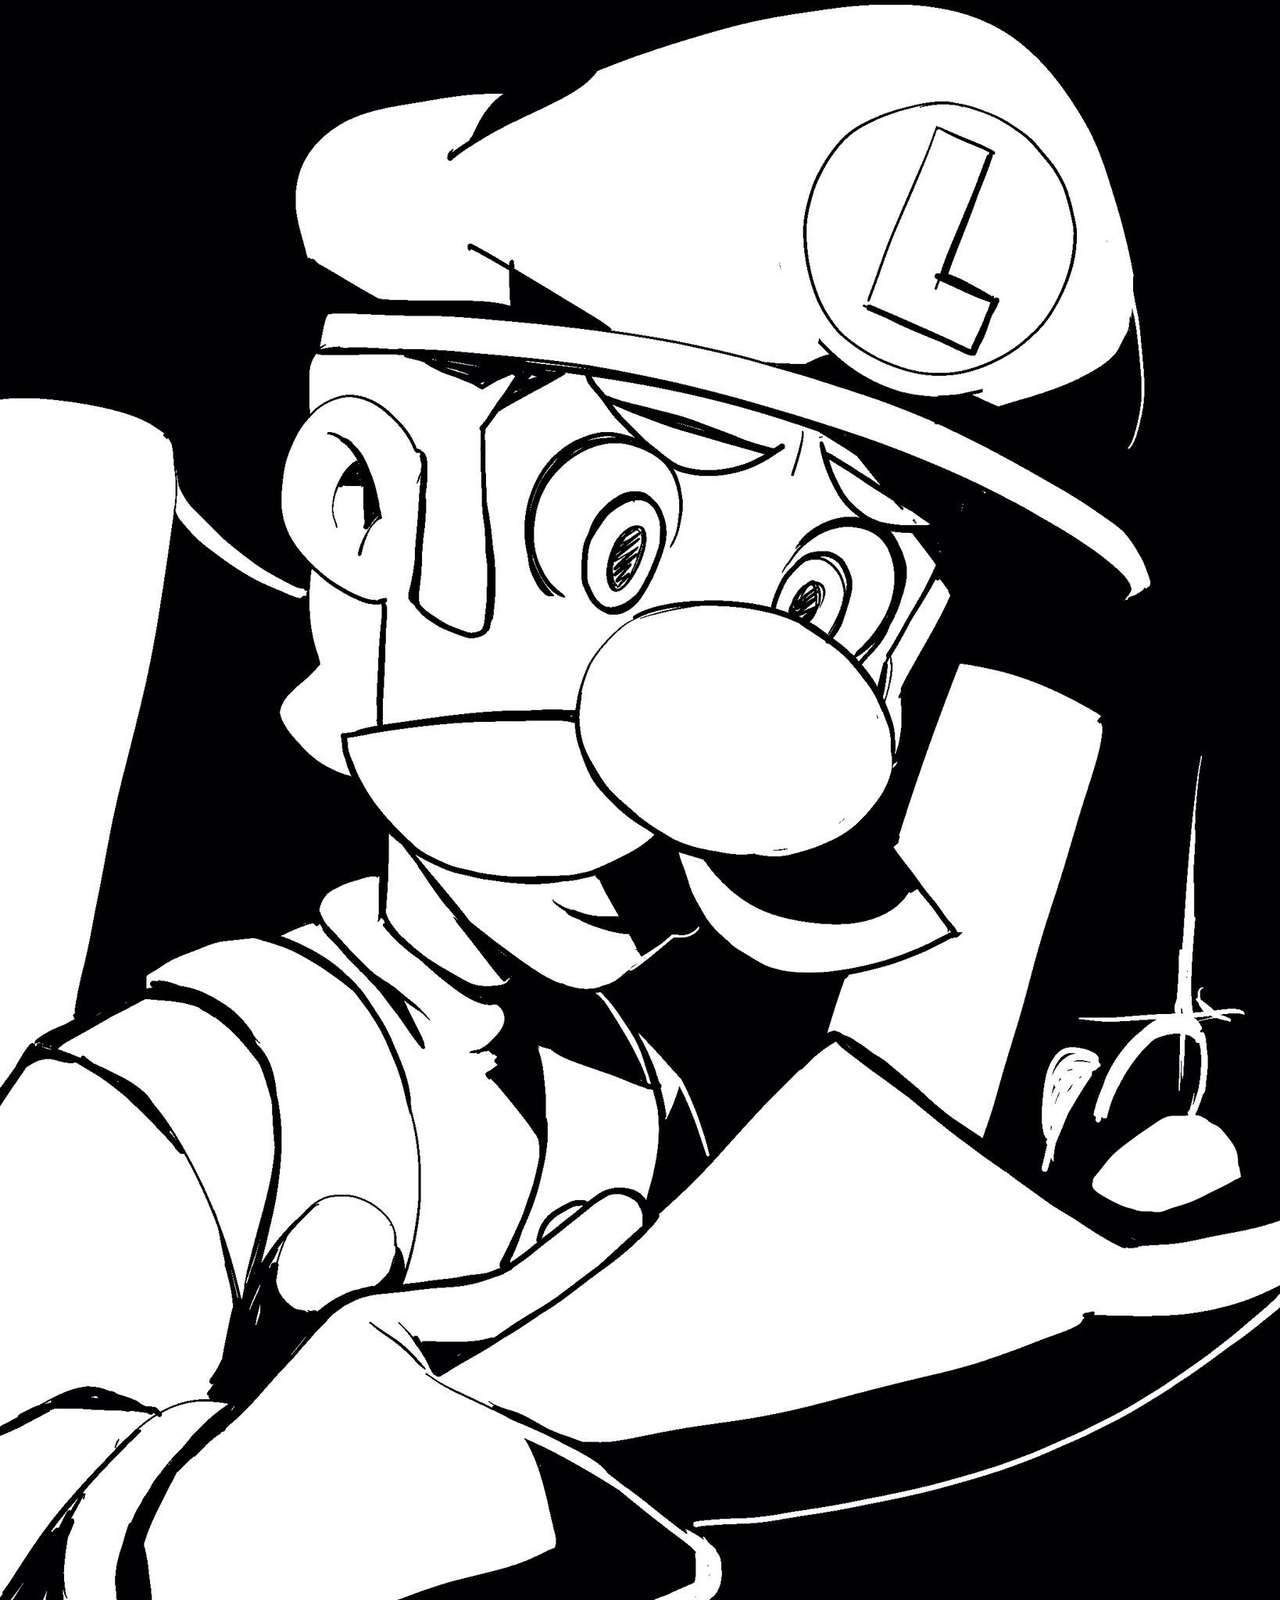 [Nisego] Inktober 2 - Luigi's Mansion (Super Mario Bros.) [Ongoing] 5